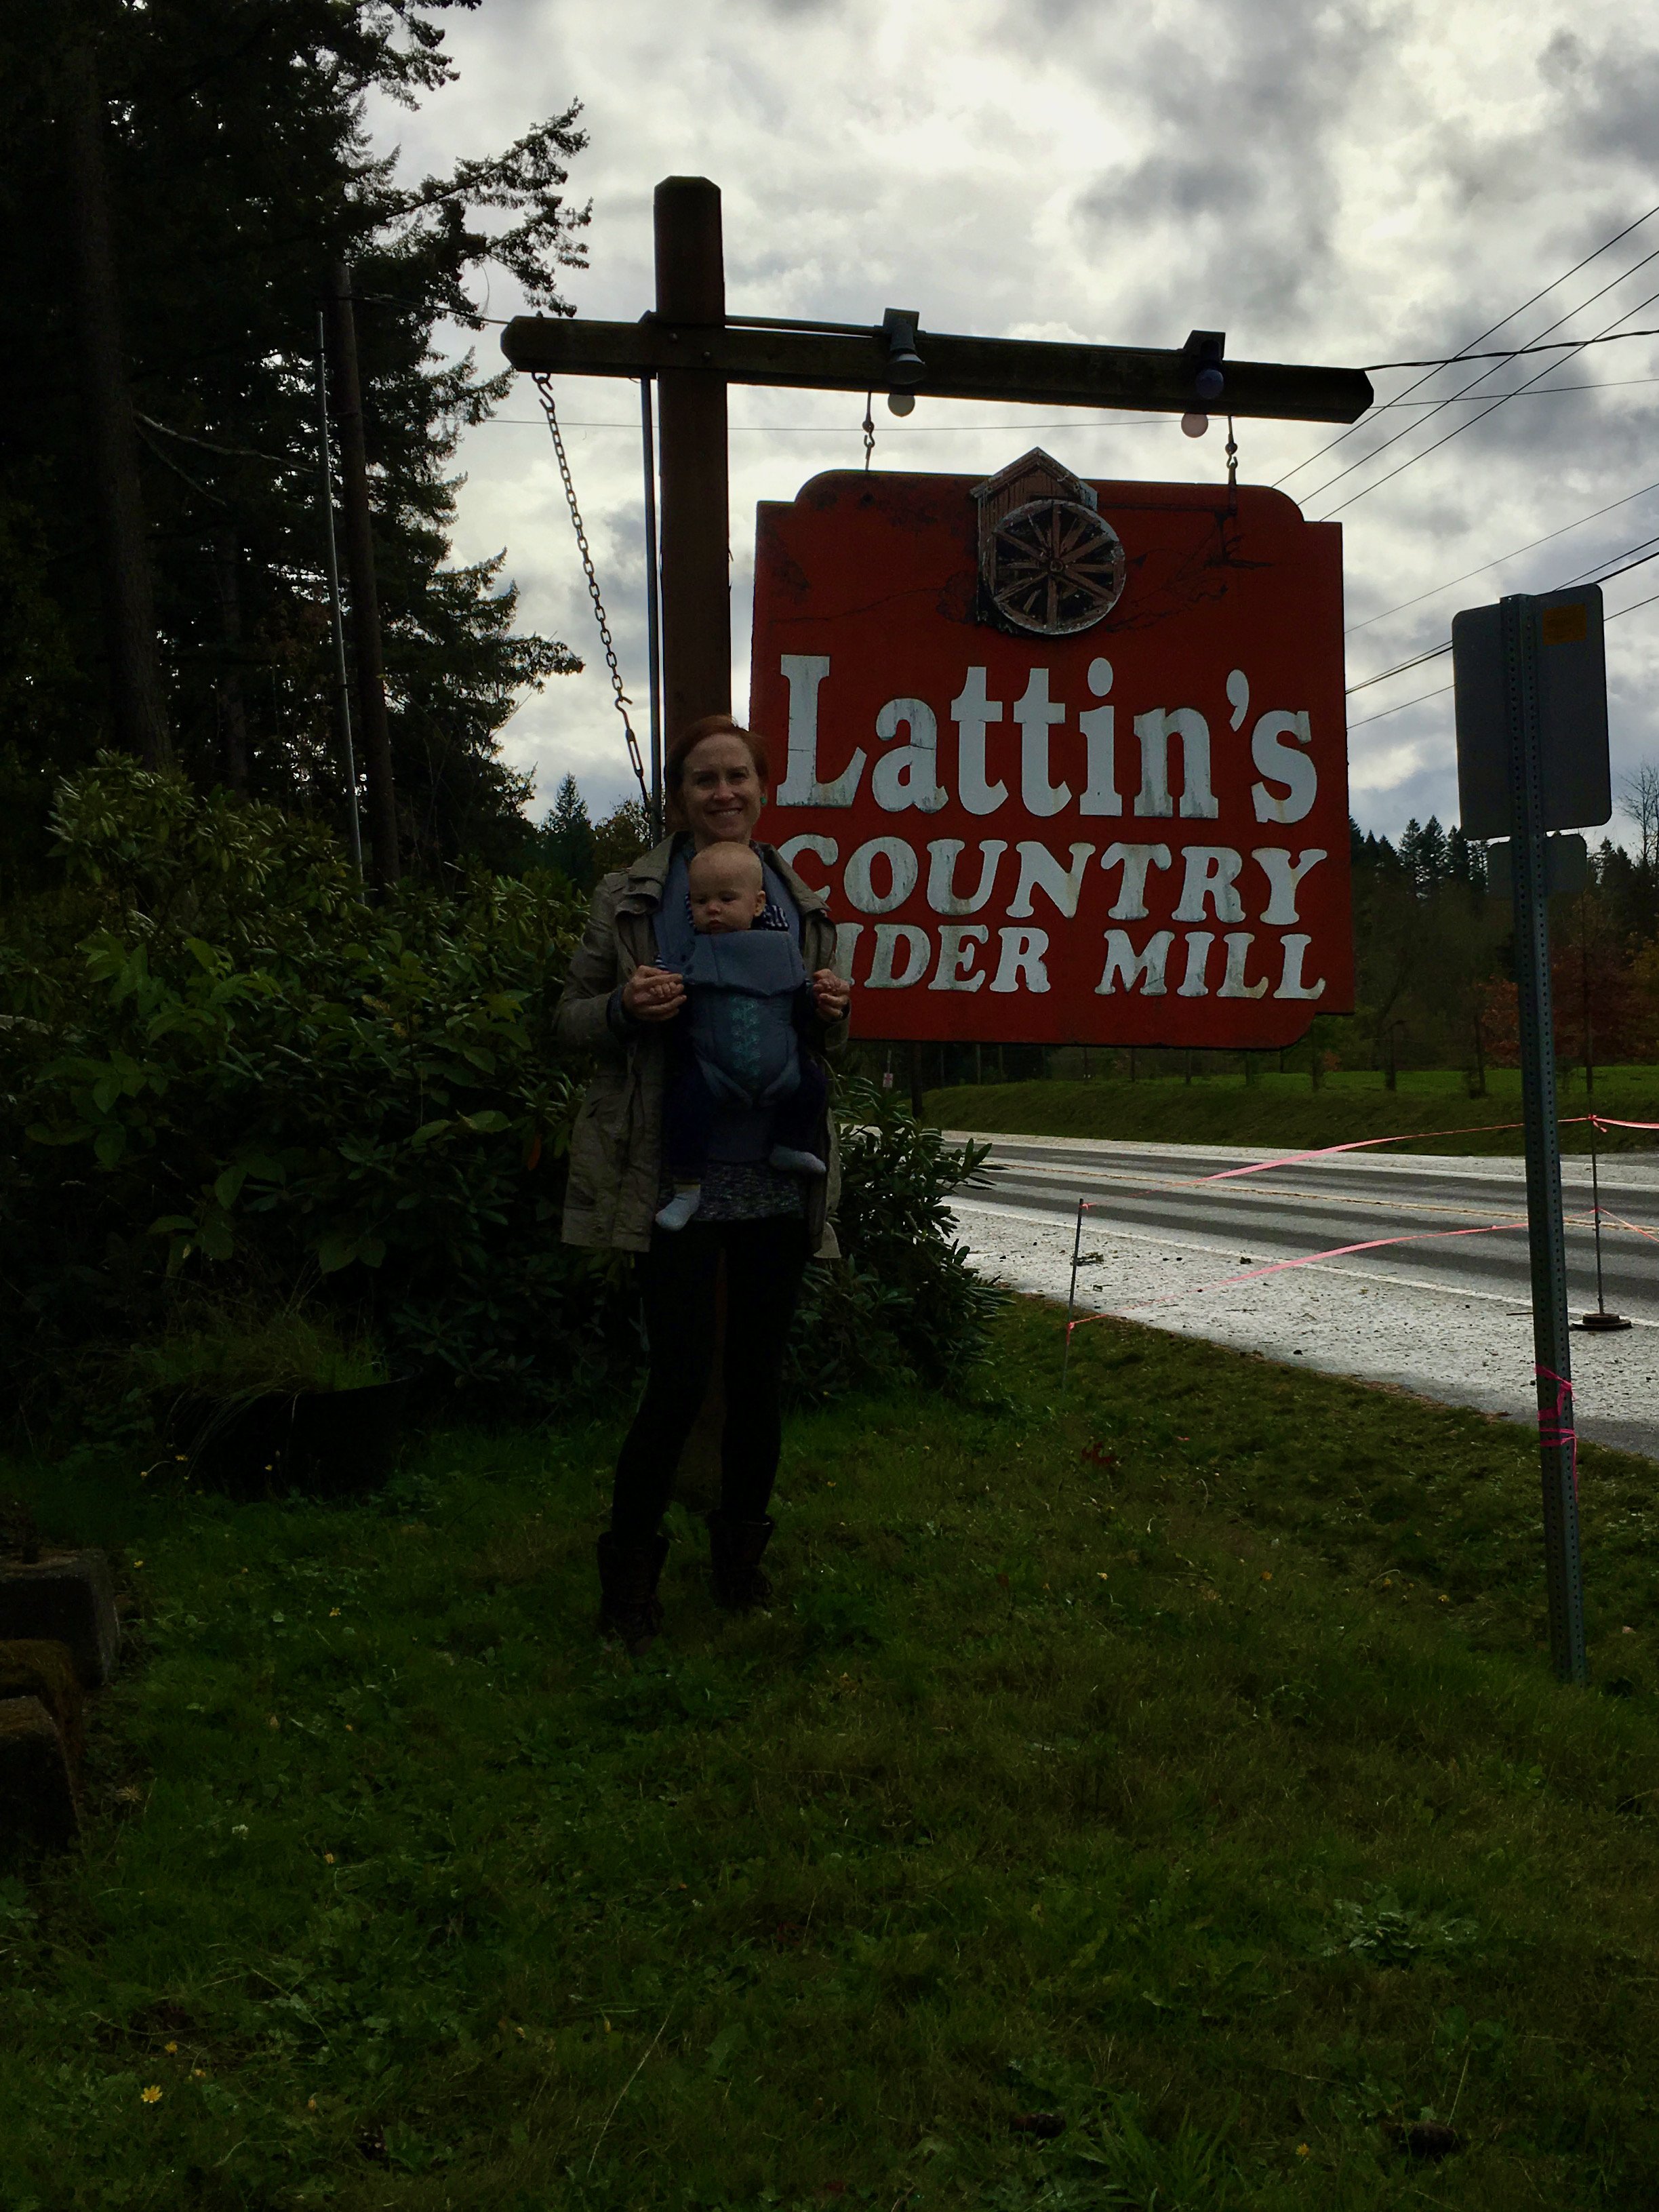 Lattin's Cider Mill and Farm